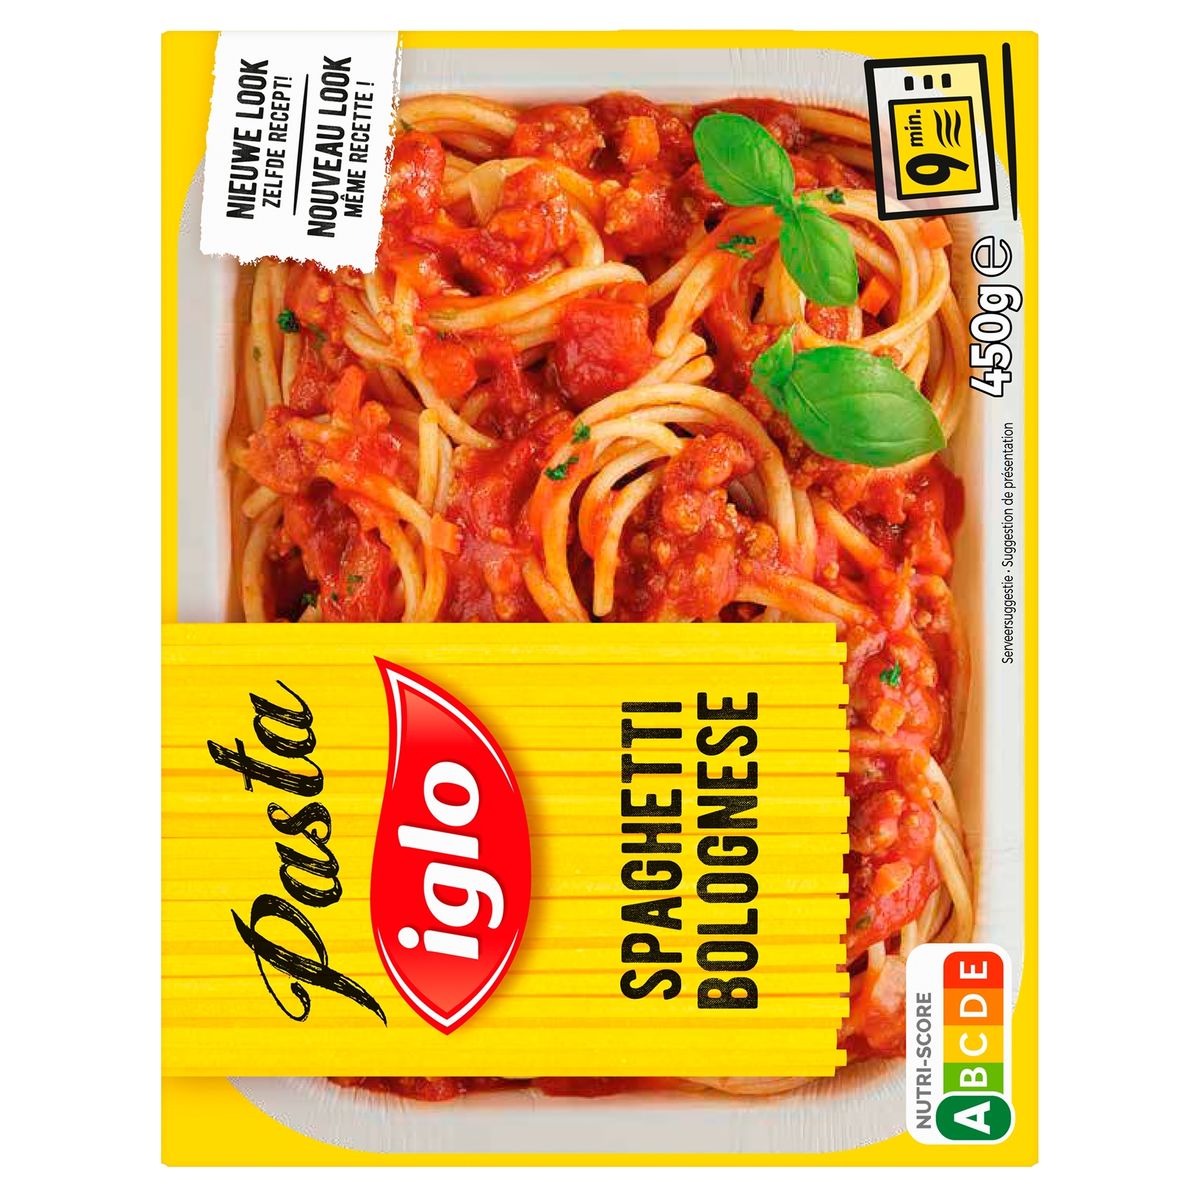 Iglo Pasta Spaghetti Bolognese 450 g